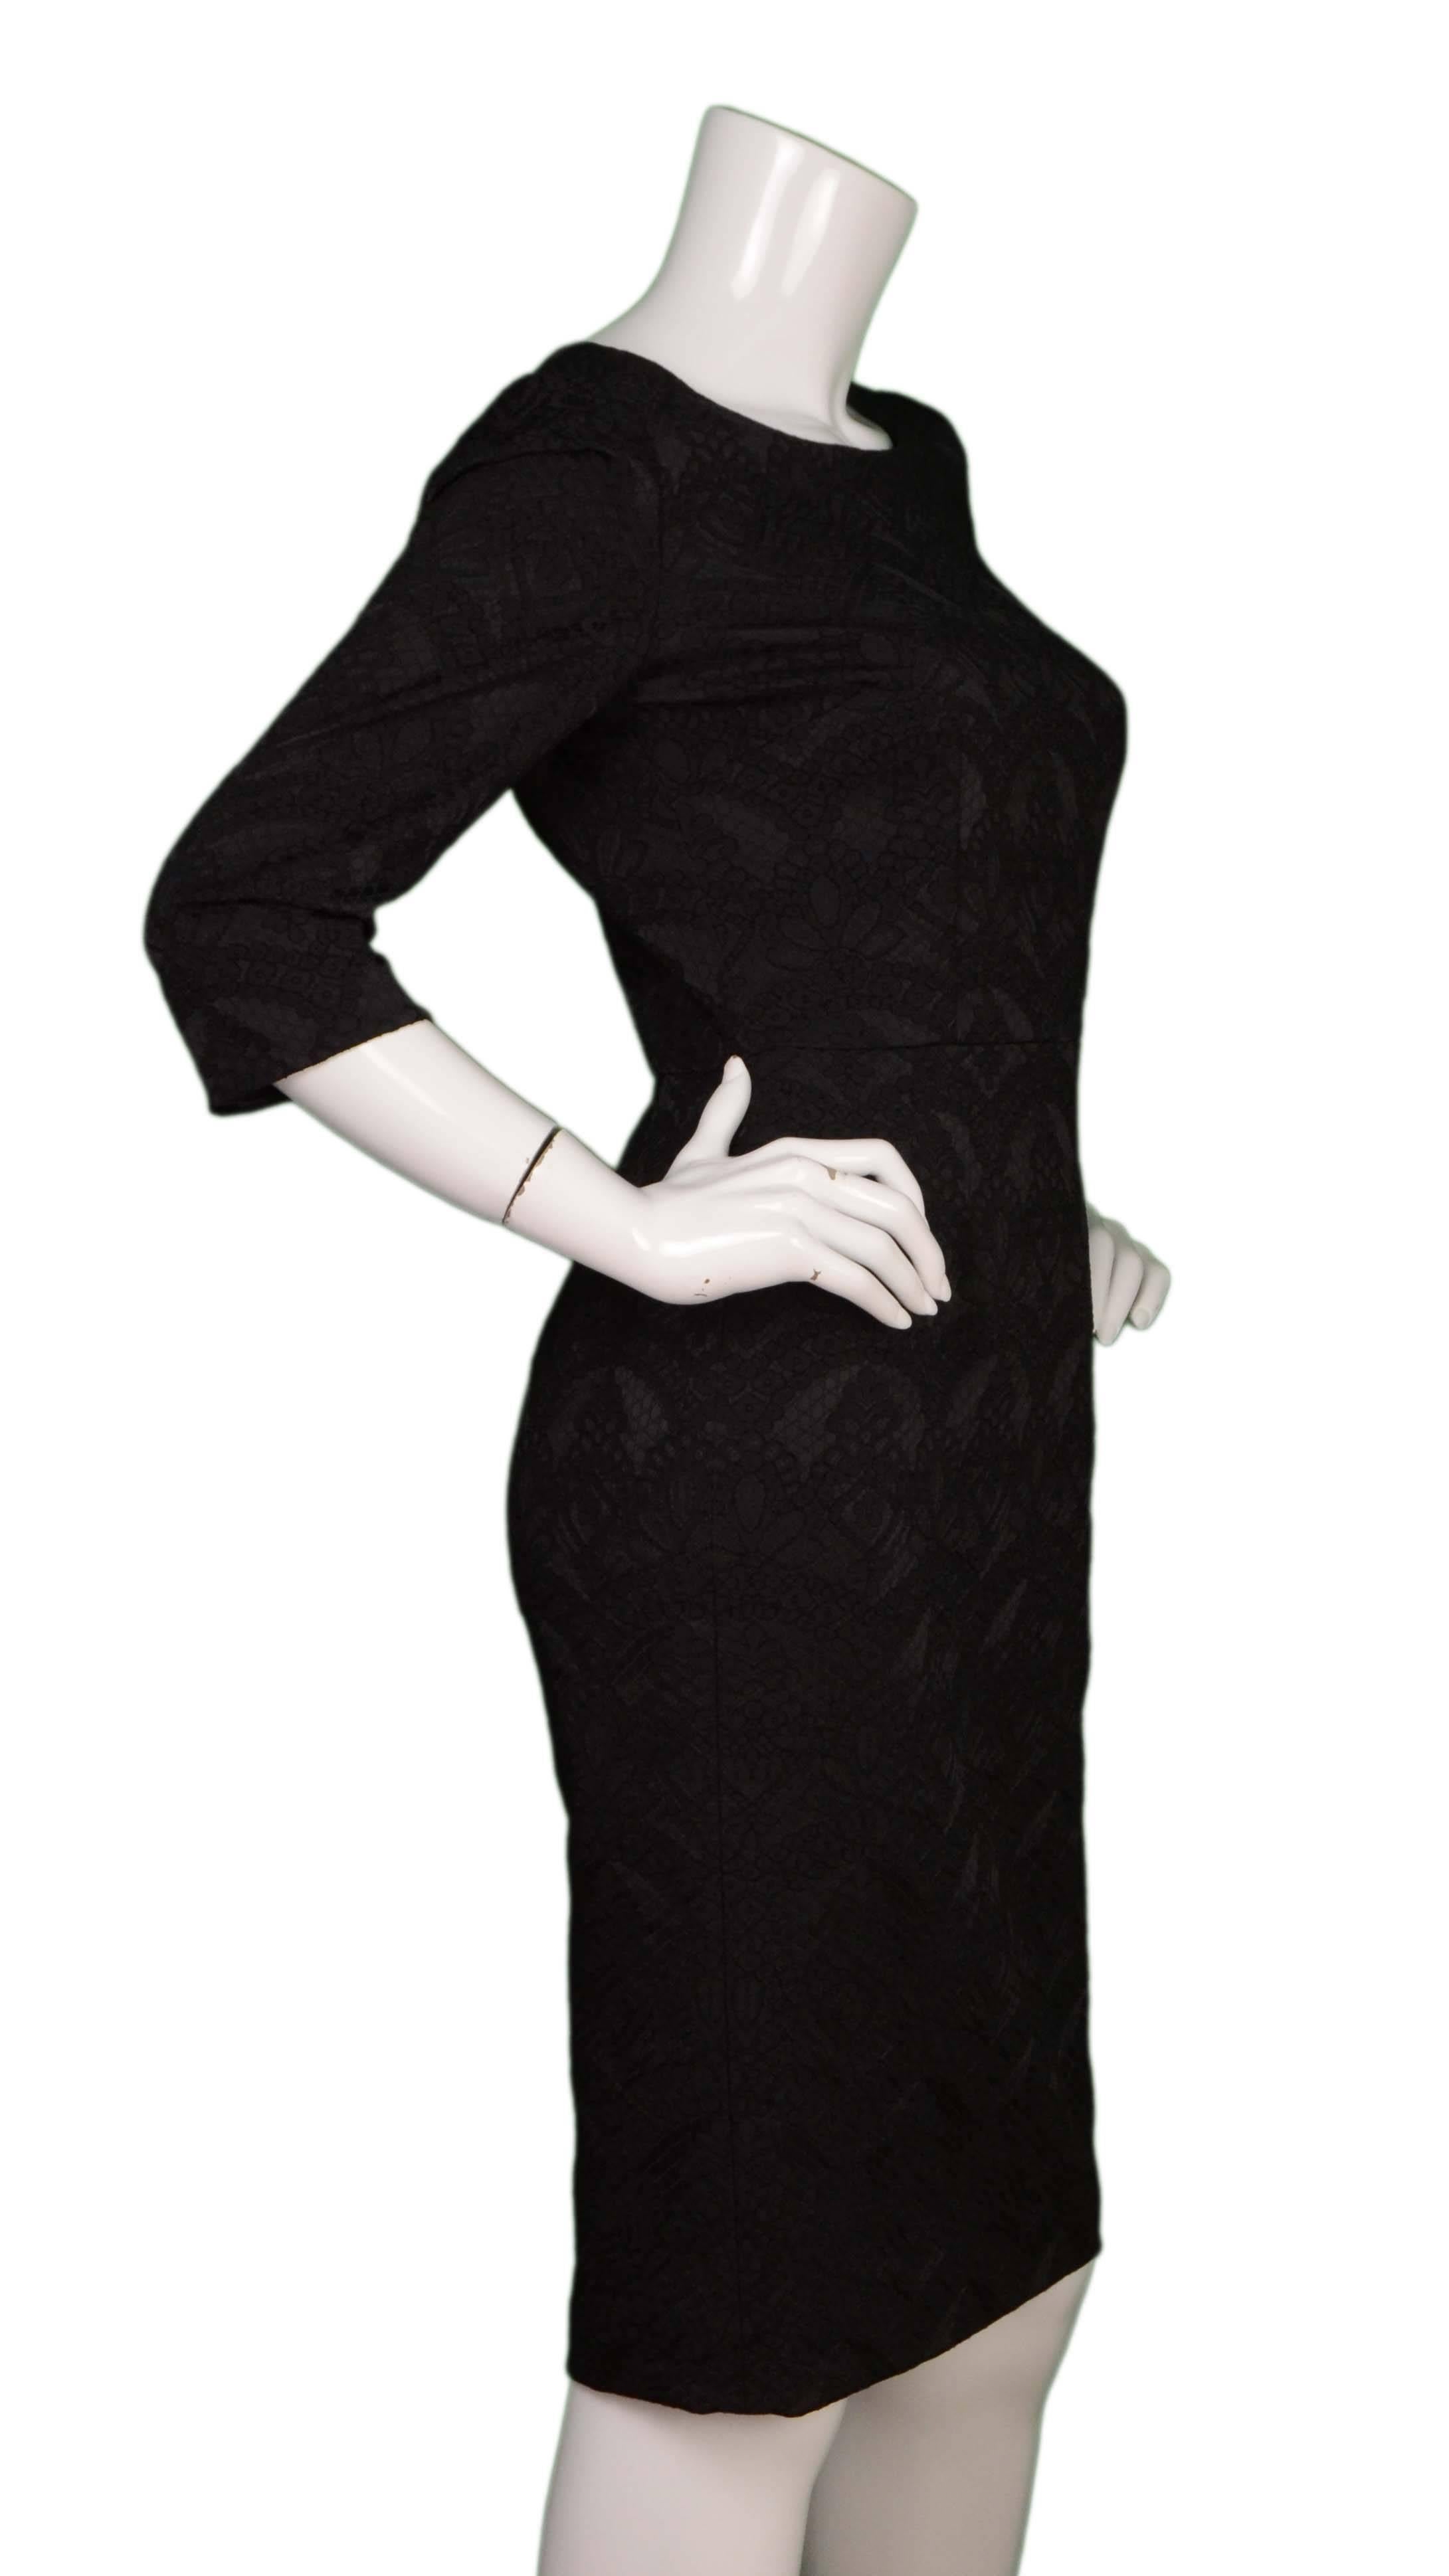 Dolce & Gabbana Black Brocade 3/4 Sleeve Dress 
Made In: Italy
Color: Black
Composition: 46% acetate, 41% polyester, 12% nylon, 1% elastane
Lining: Black, 96% silk, 4% elastane
Closure/Opening: Back center zip up closure
Exterior Pockets: